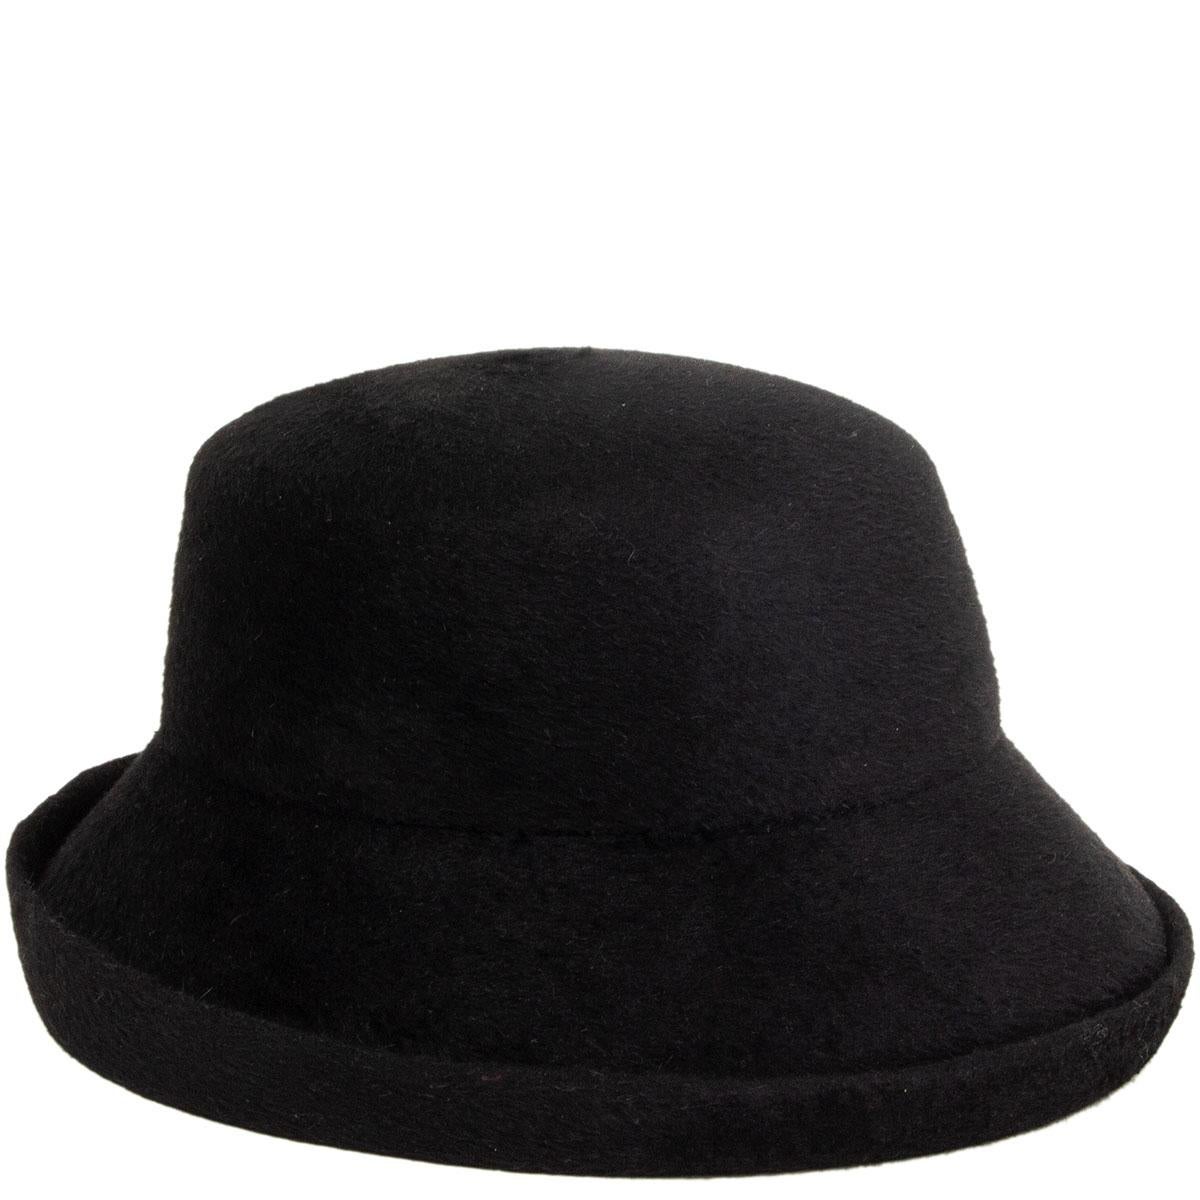 Black auth YOHJI YAMAMOTO black RABBIT FUR Hat 58